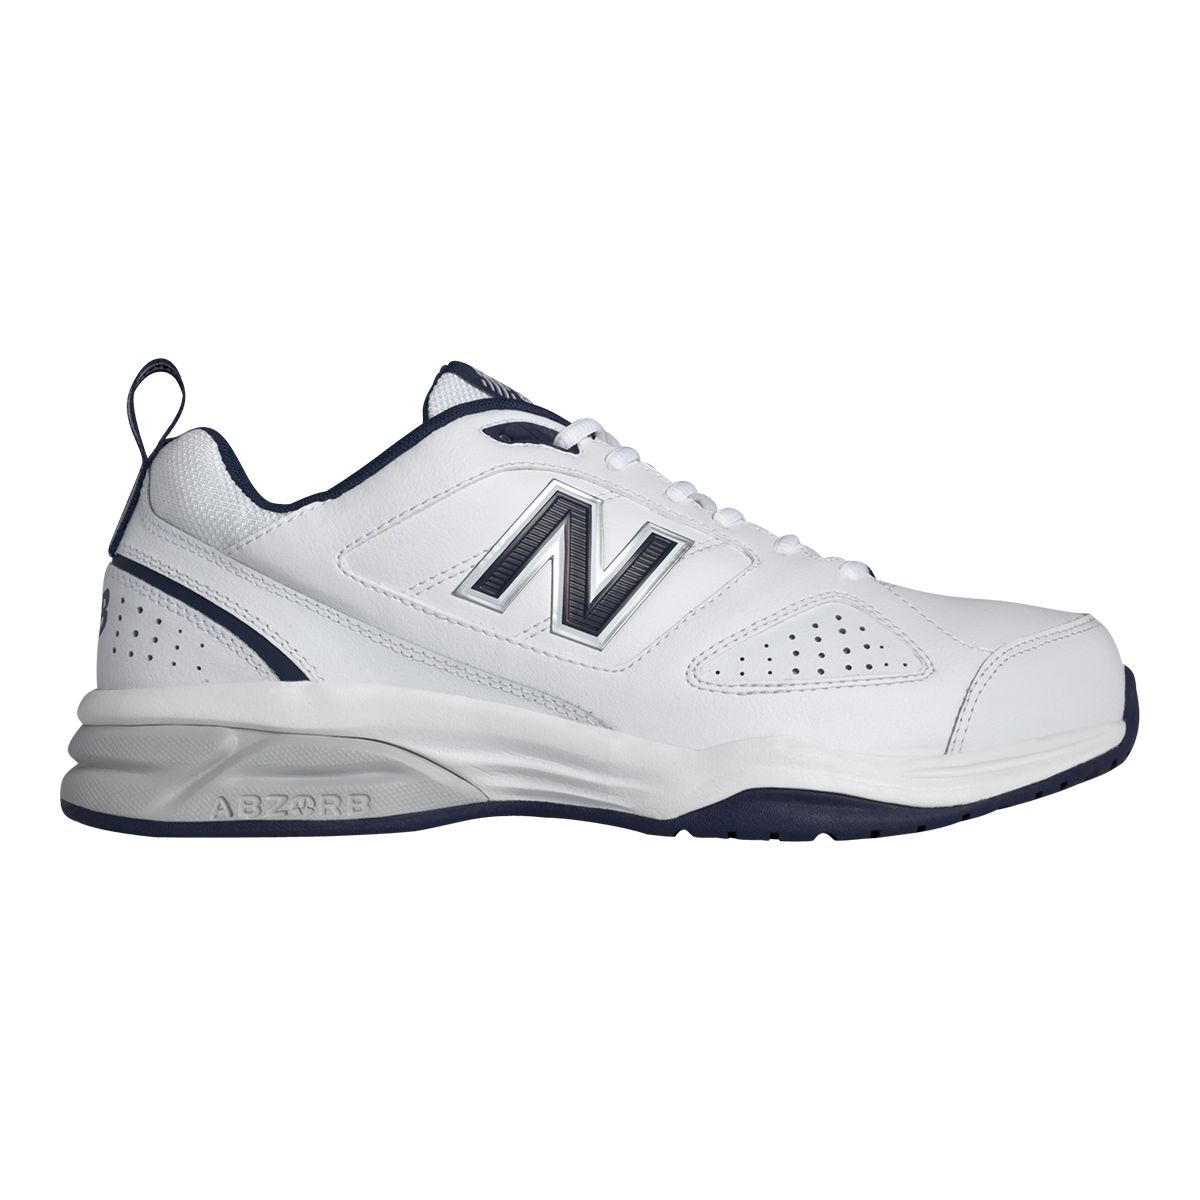 New Balance Men's 623v3 Training Shoes, 2E Wide Width, Running ...